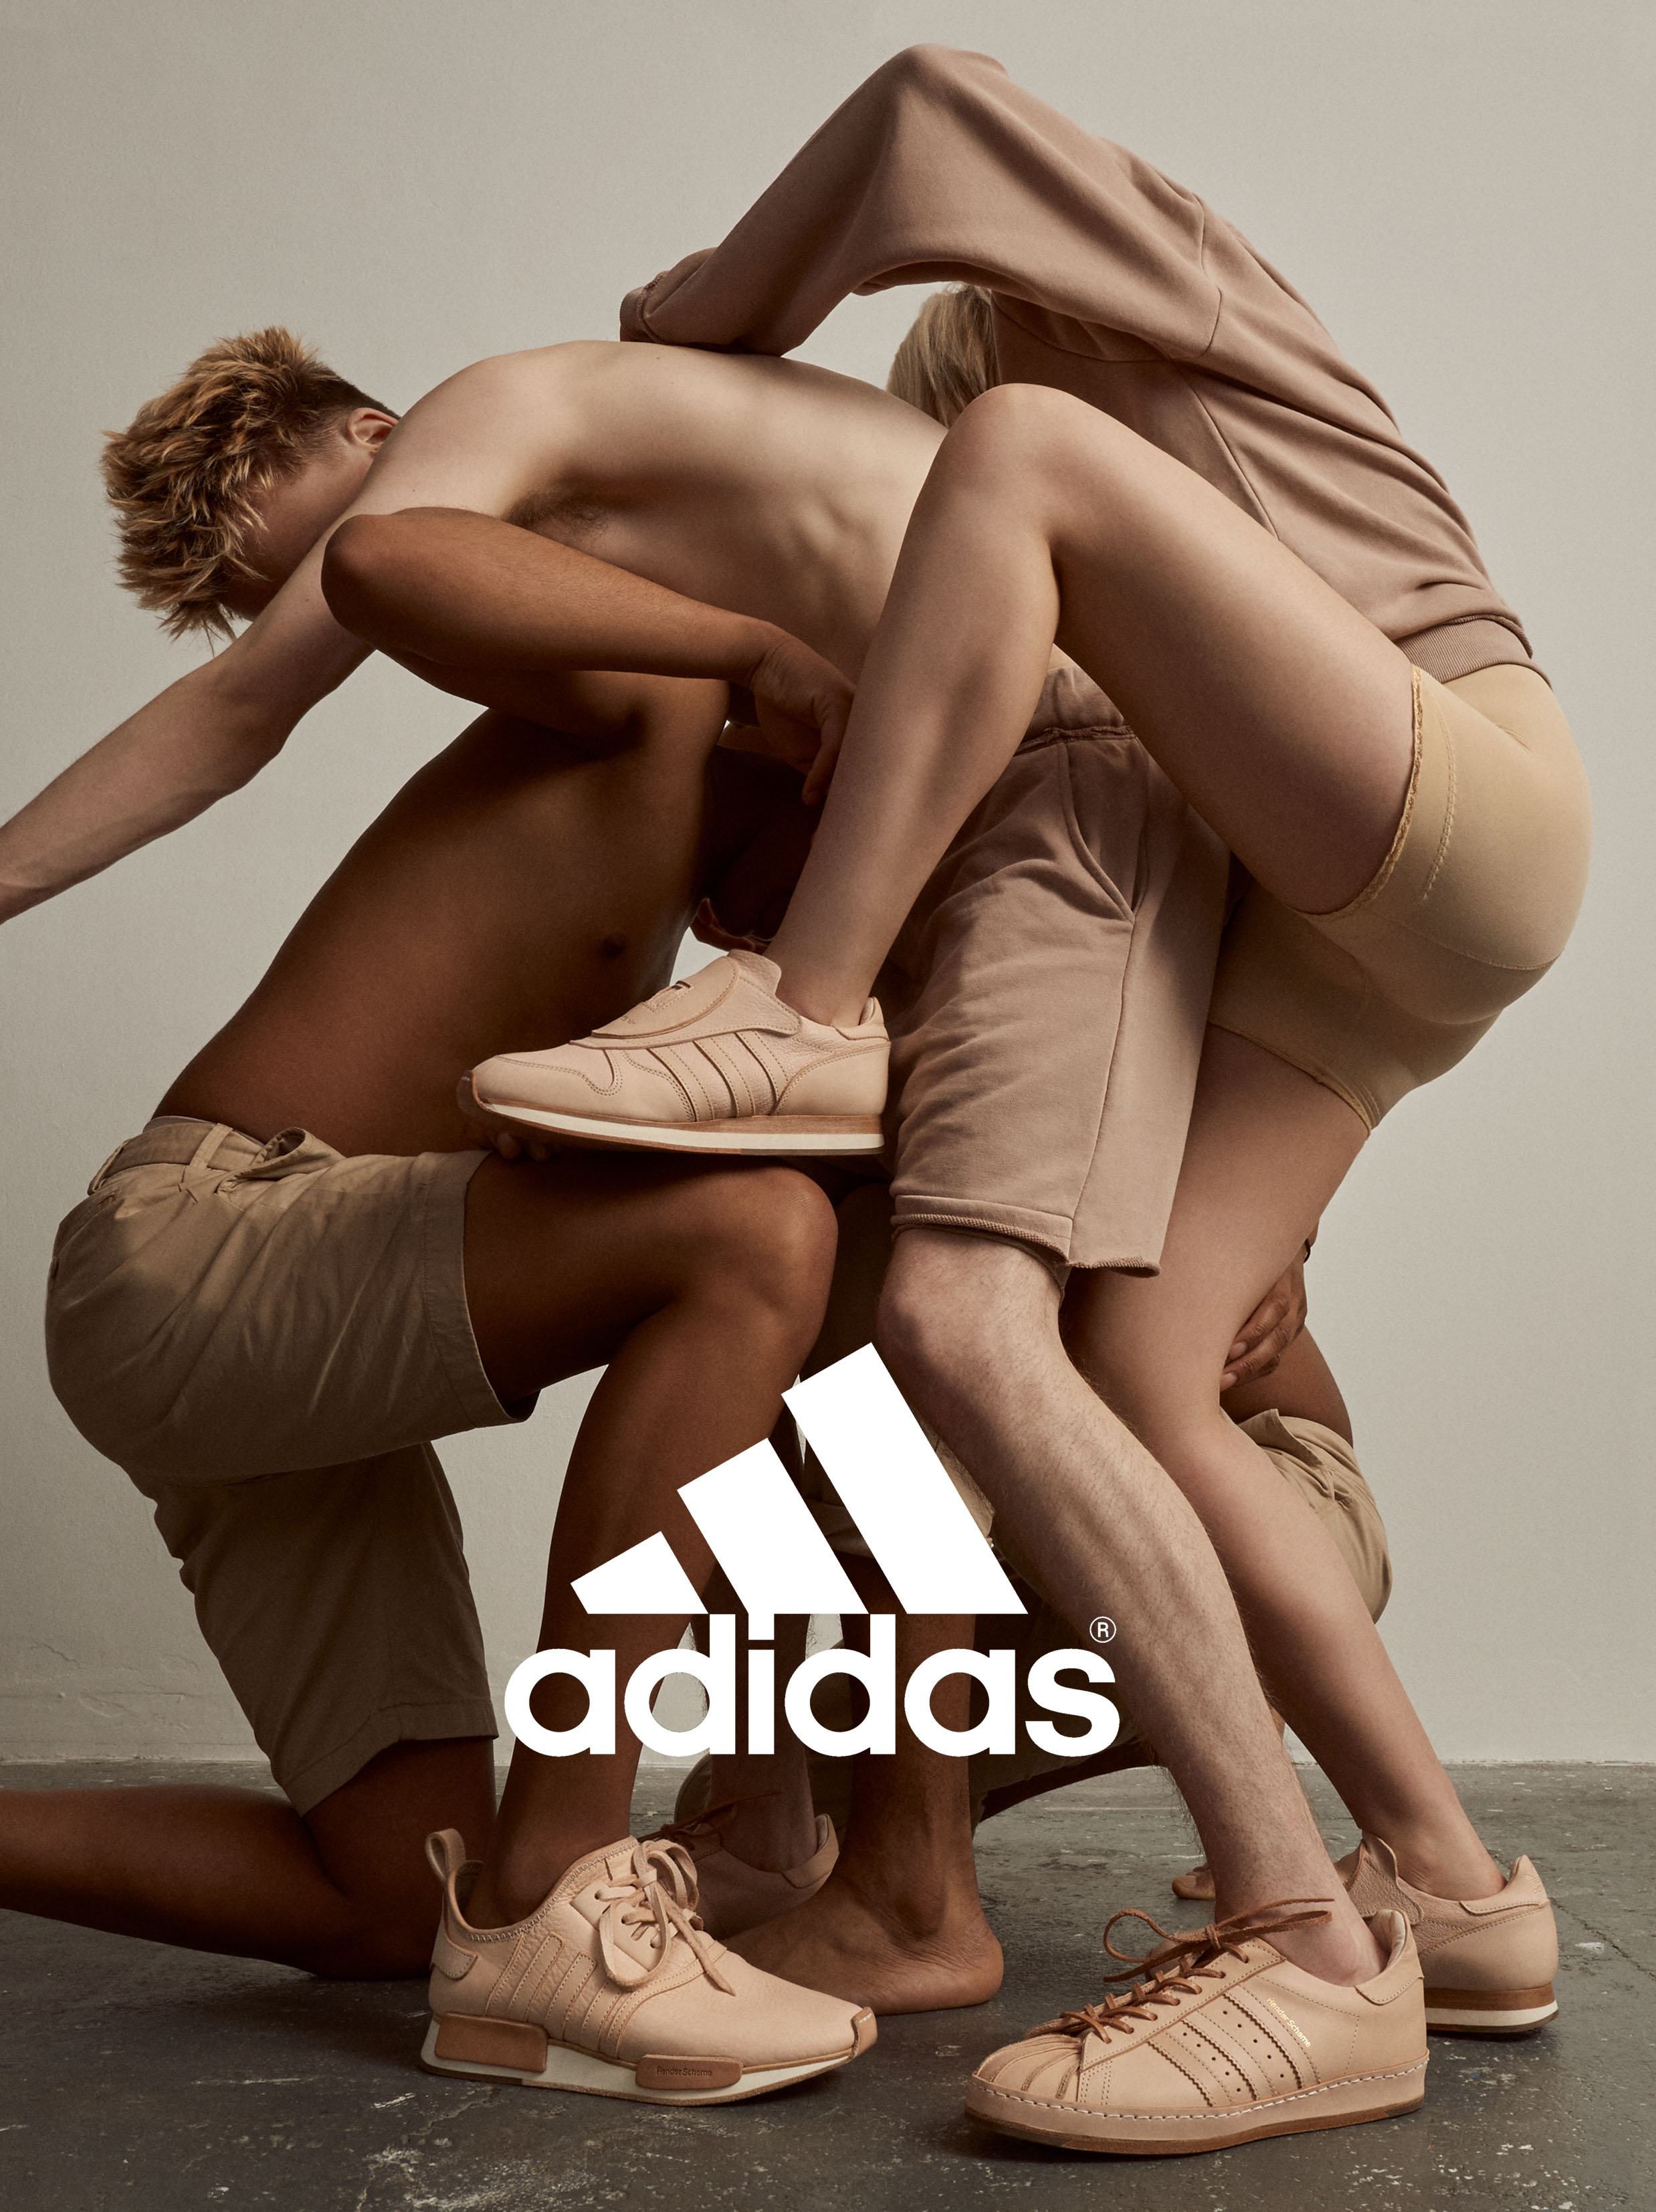 Adidas Originals x Hender Scheme F/W 2017 | Alessio Bolzoni | Adidas | Tuomas Laitinen | Numerique Retouch Photo Retouching Studio